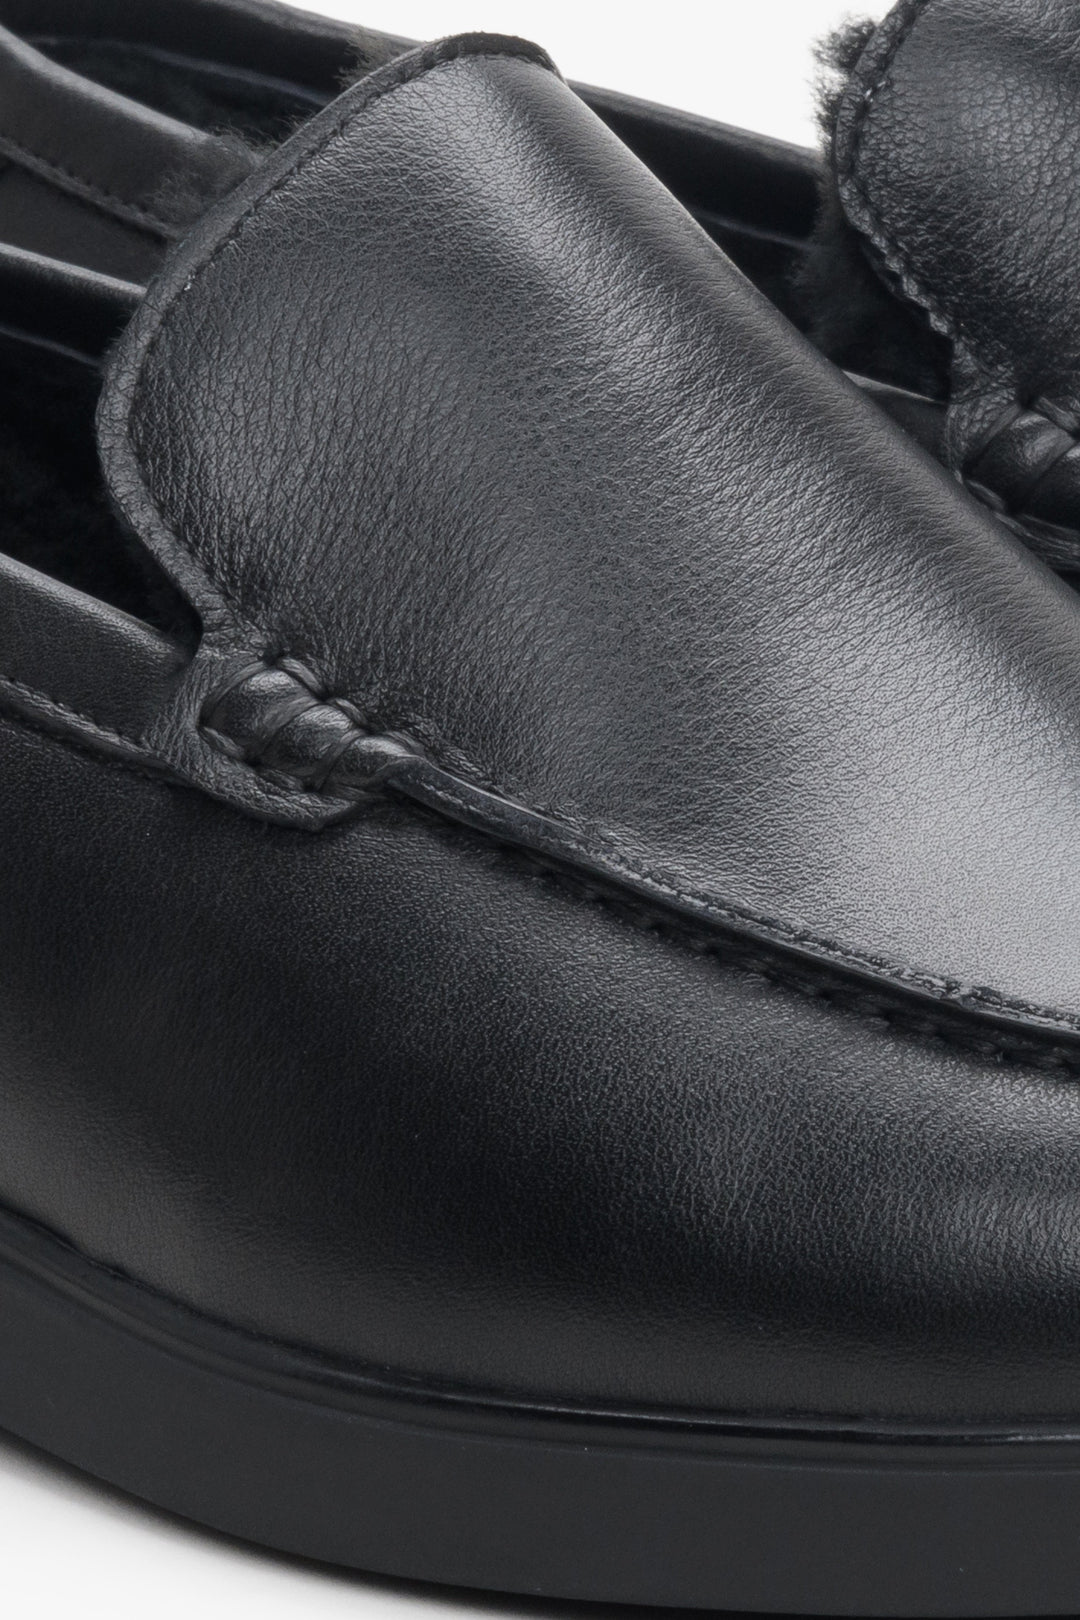 Leather men's black moccasins by Estro - close-up on details.